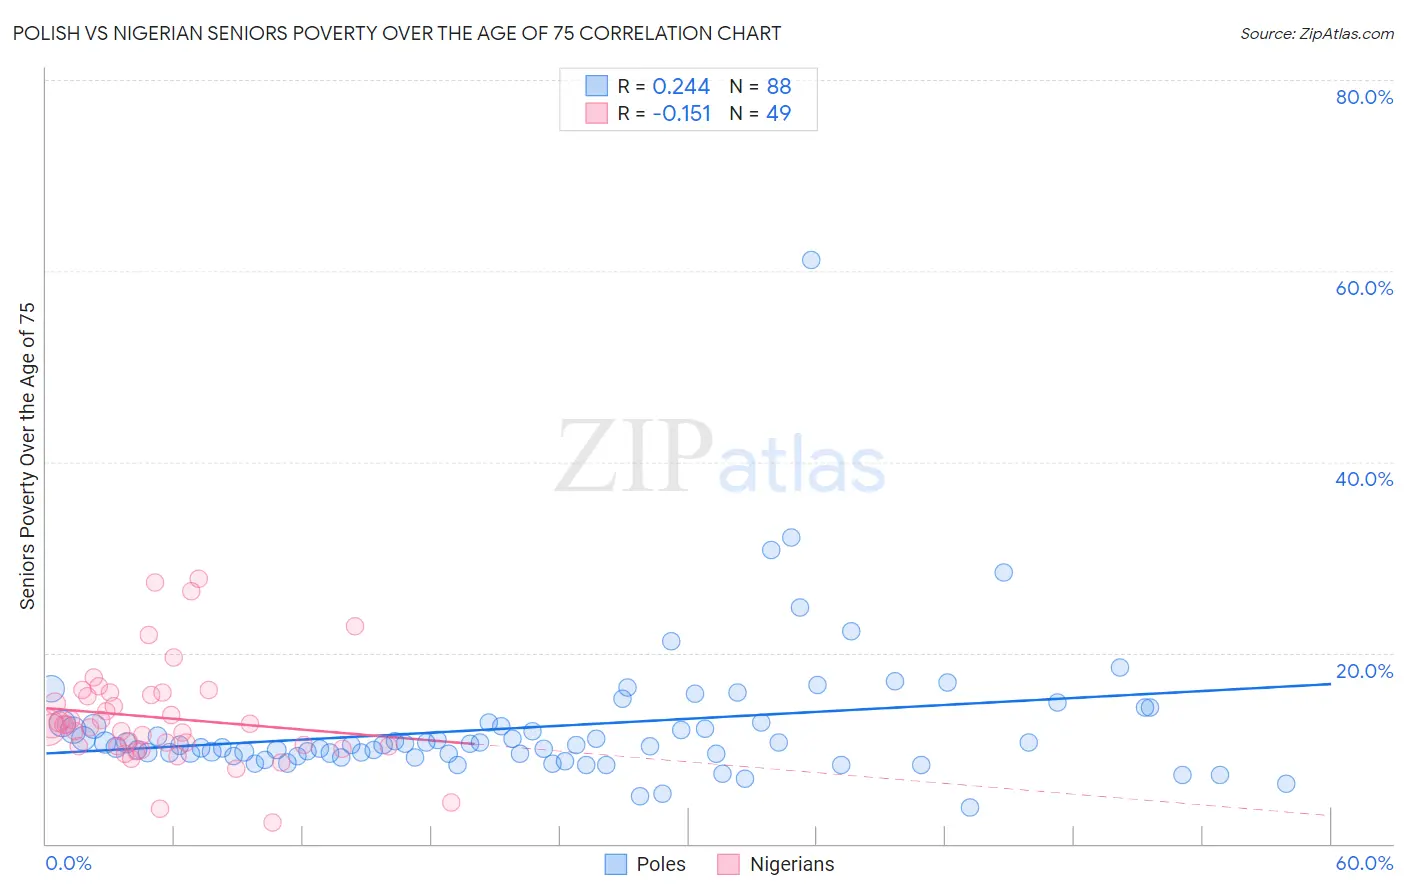 Polish vs Nigerian Seniors Poverty Over the Age of 75